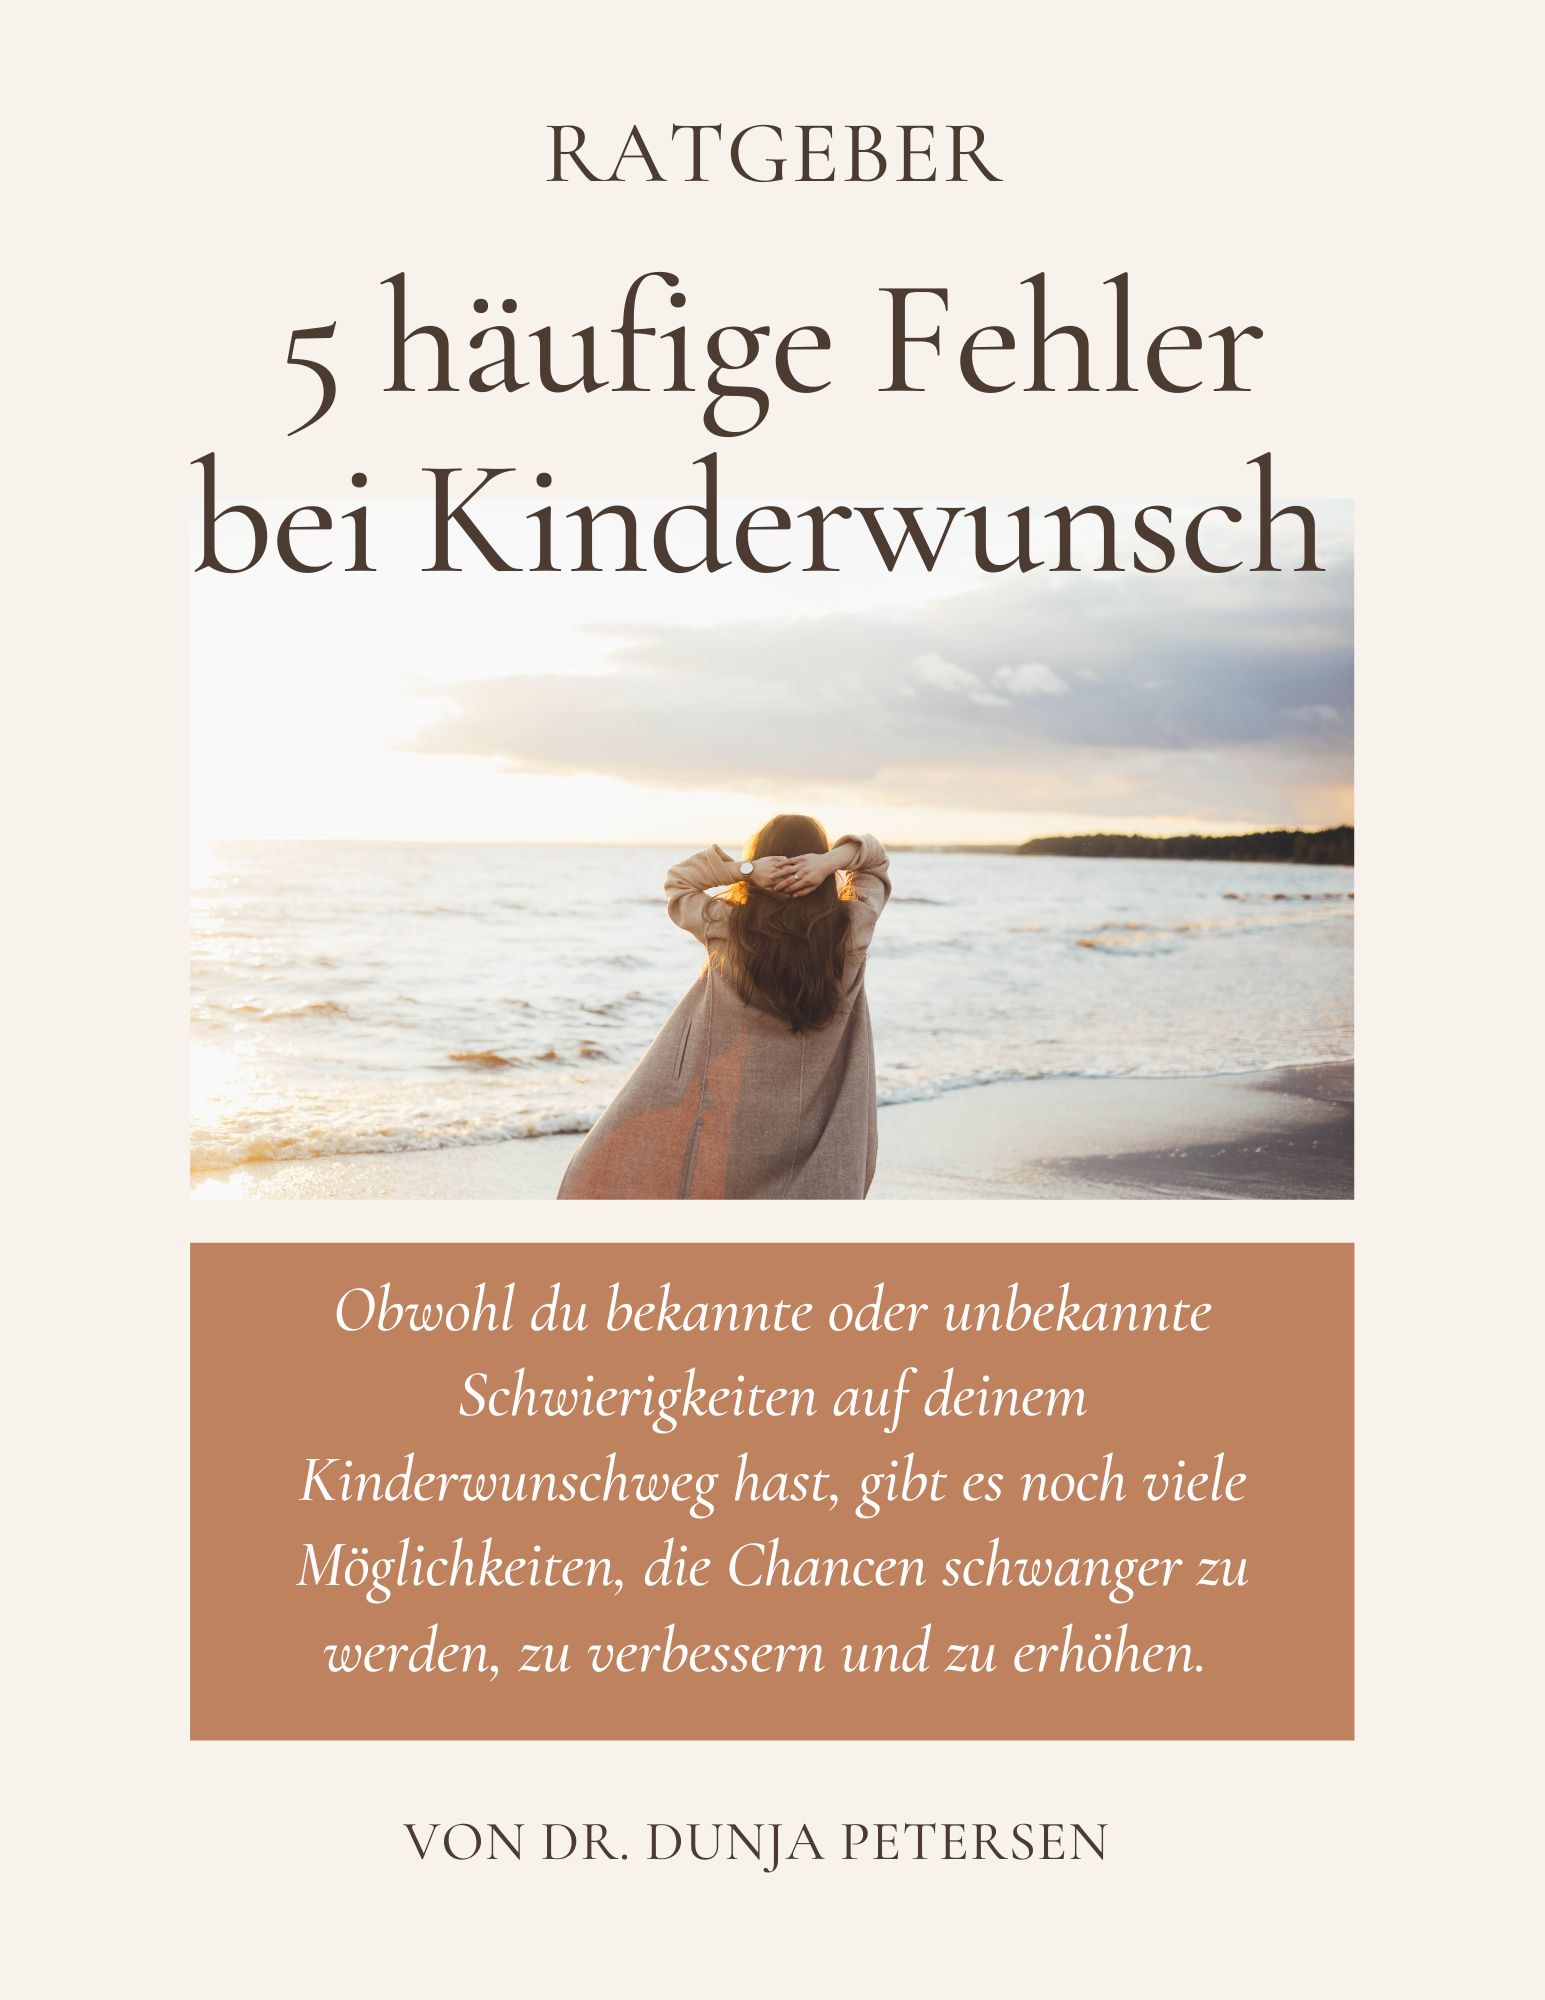 Ebook-Cover Kinderwunsch-Ratgeber